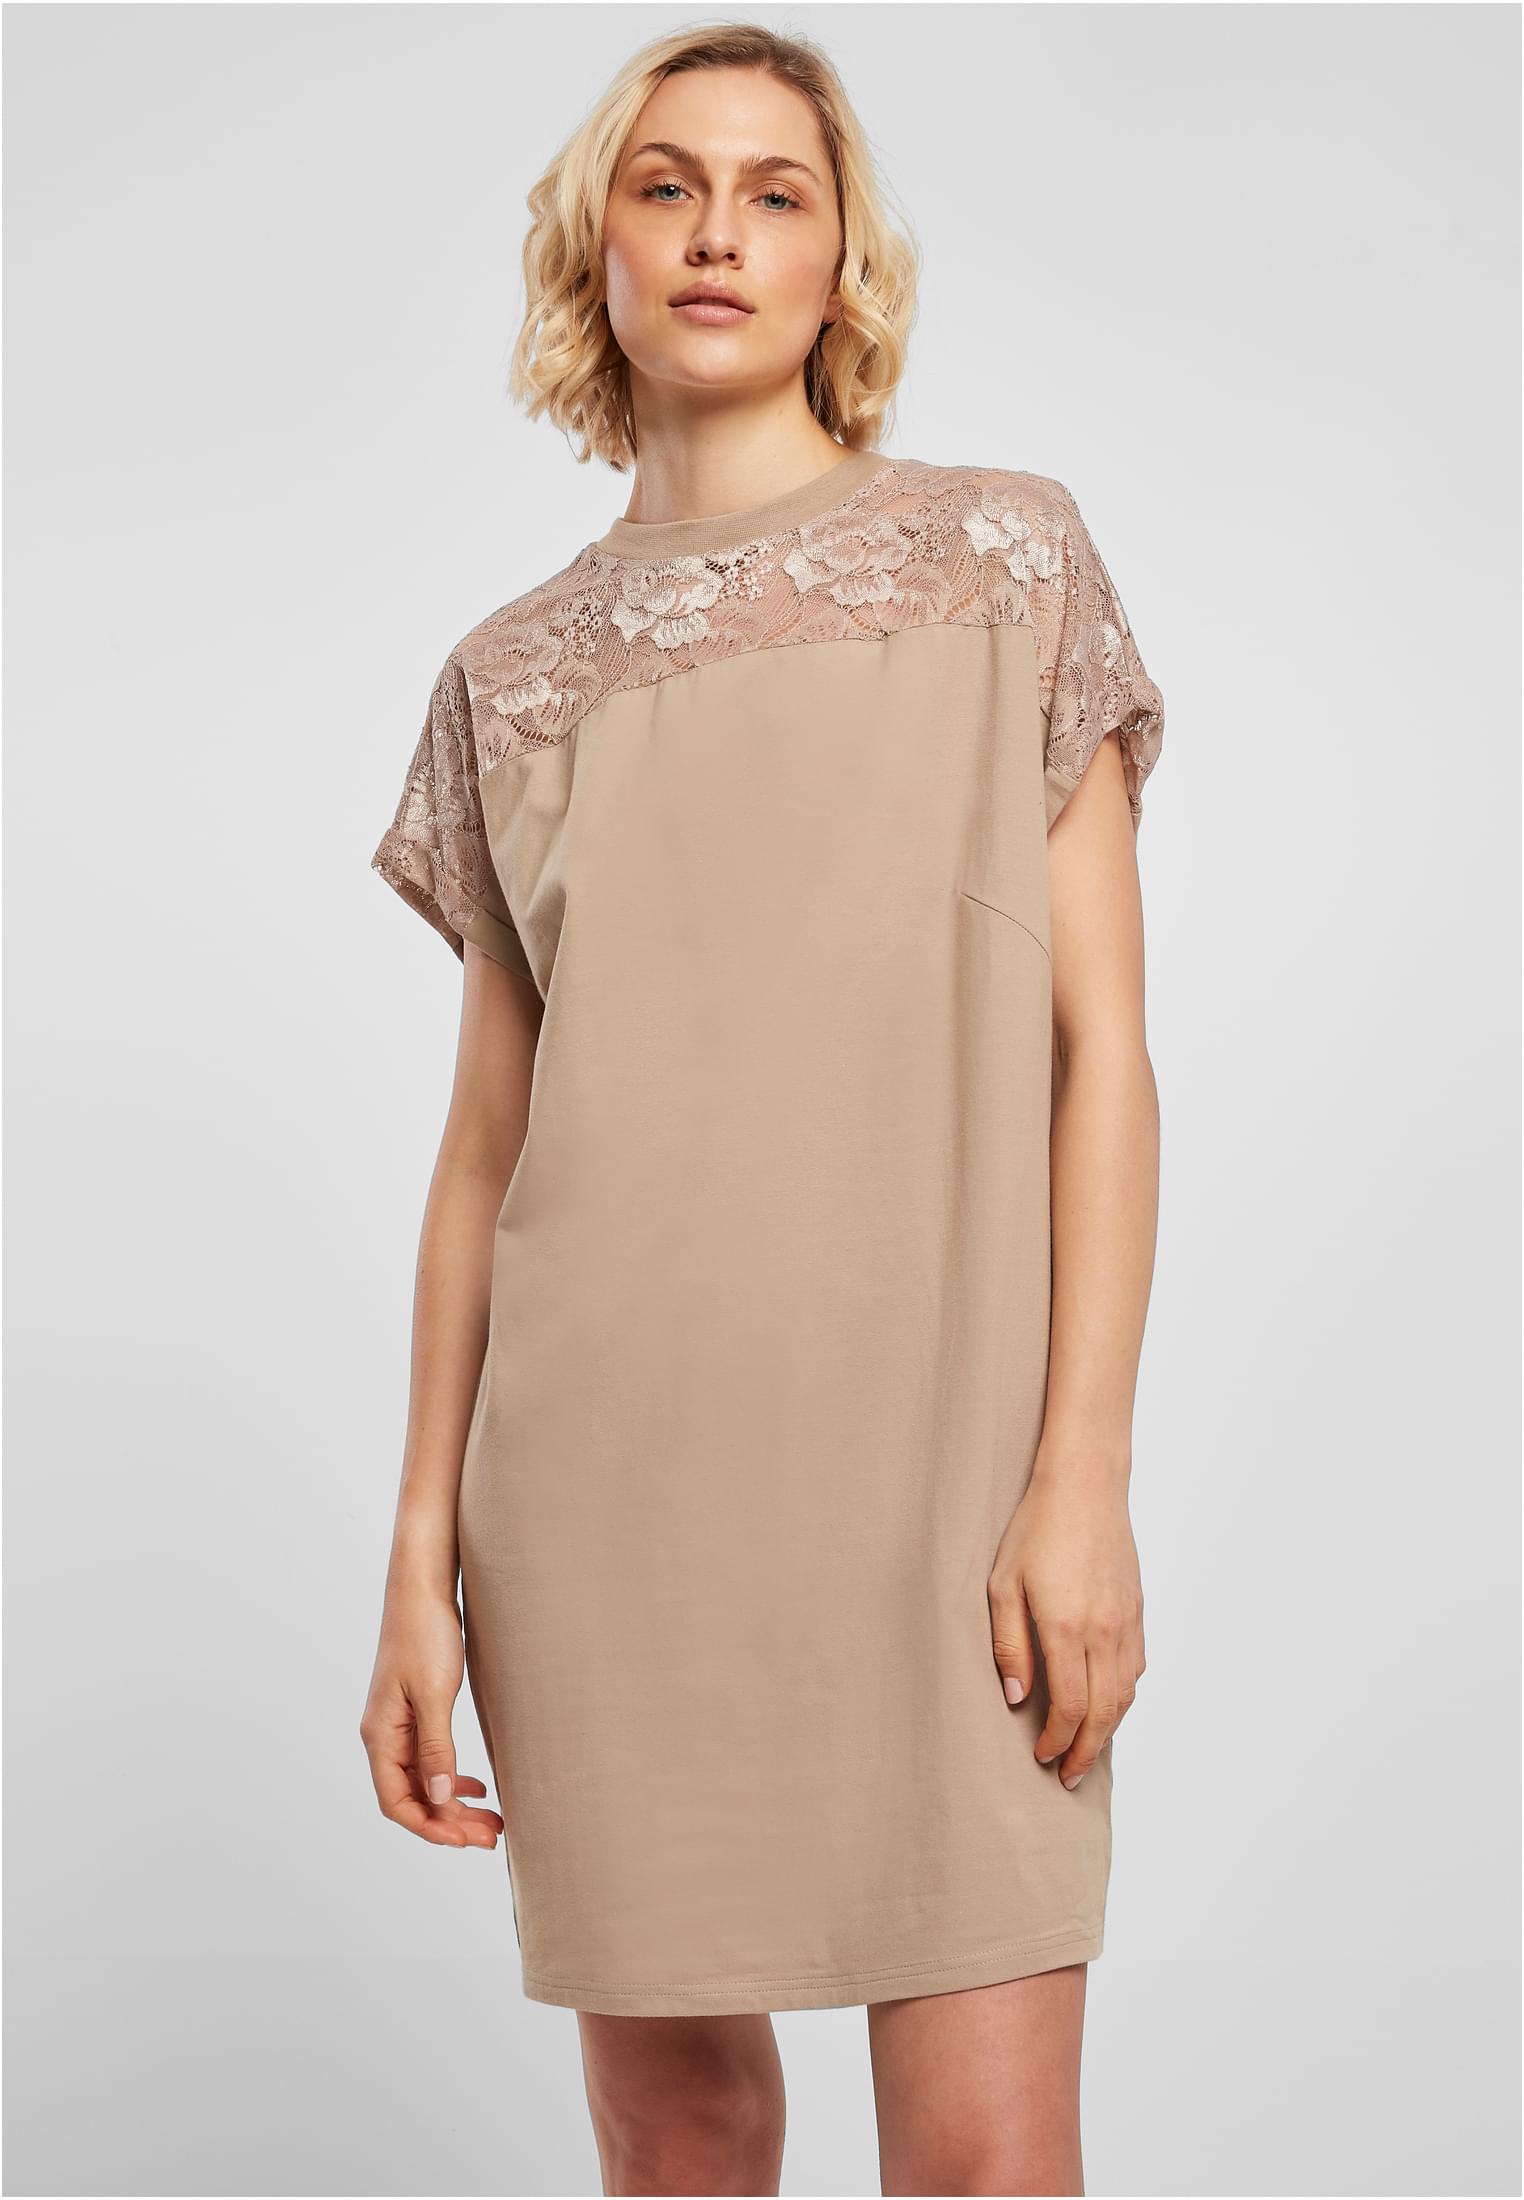 Women's Lace T-shirt Softtaupe Dress